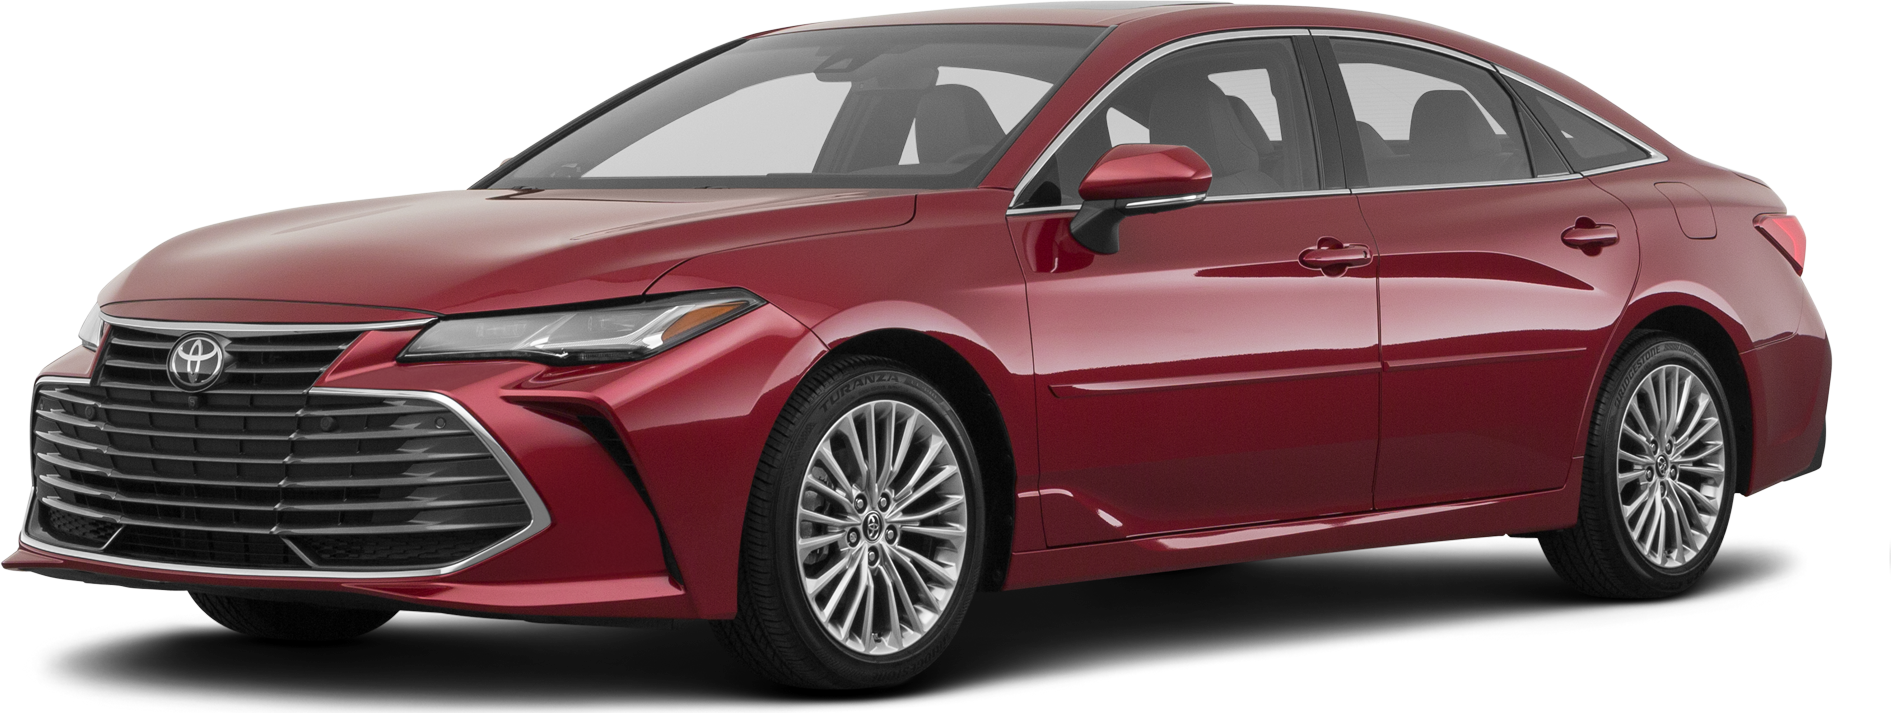 Toyota Avalon Touring: Premium sedan at a discount - WTOP News